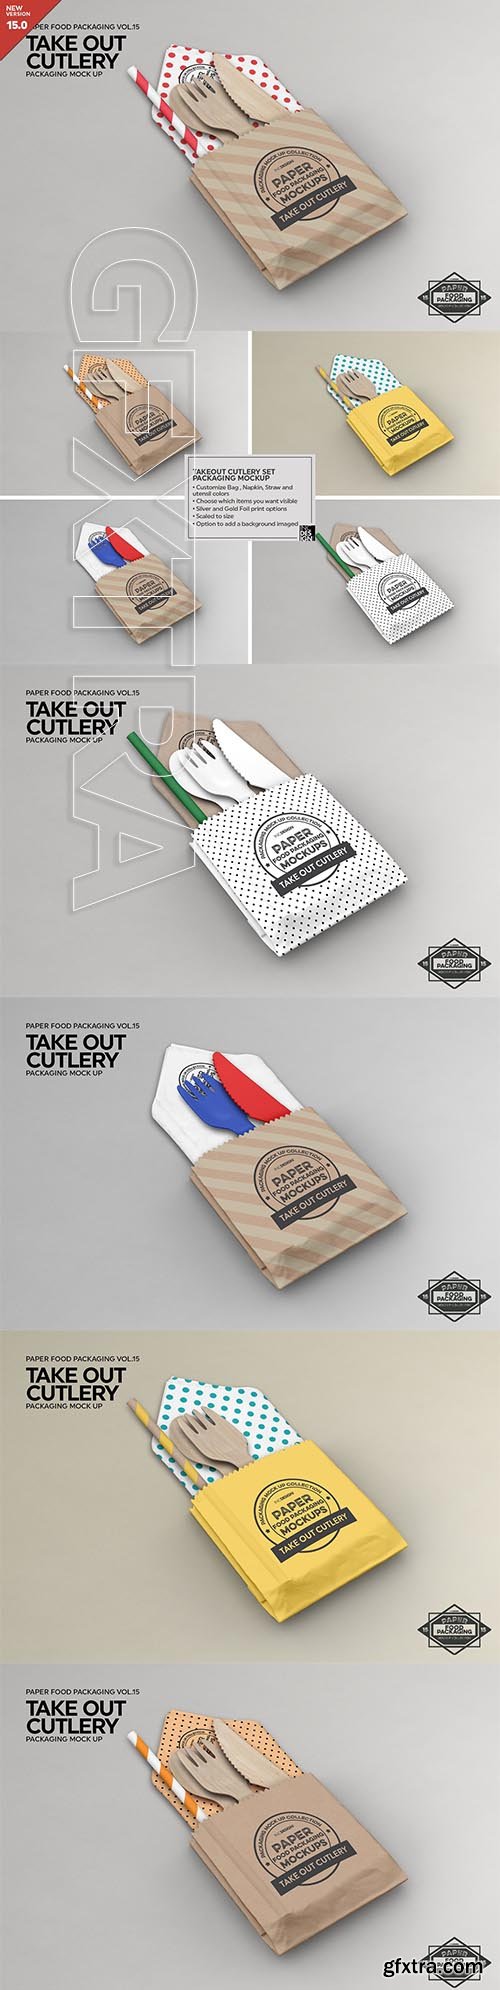 CreativeMarket - Takeout Cutlery Utensil Mockup 3602175